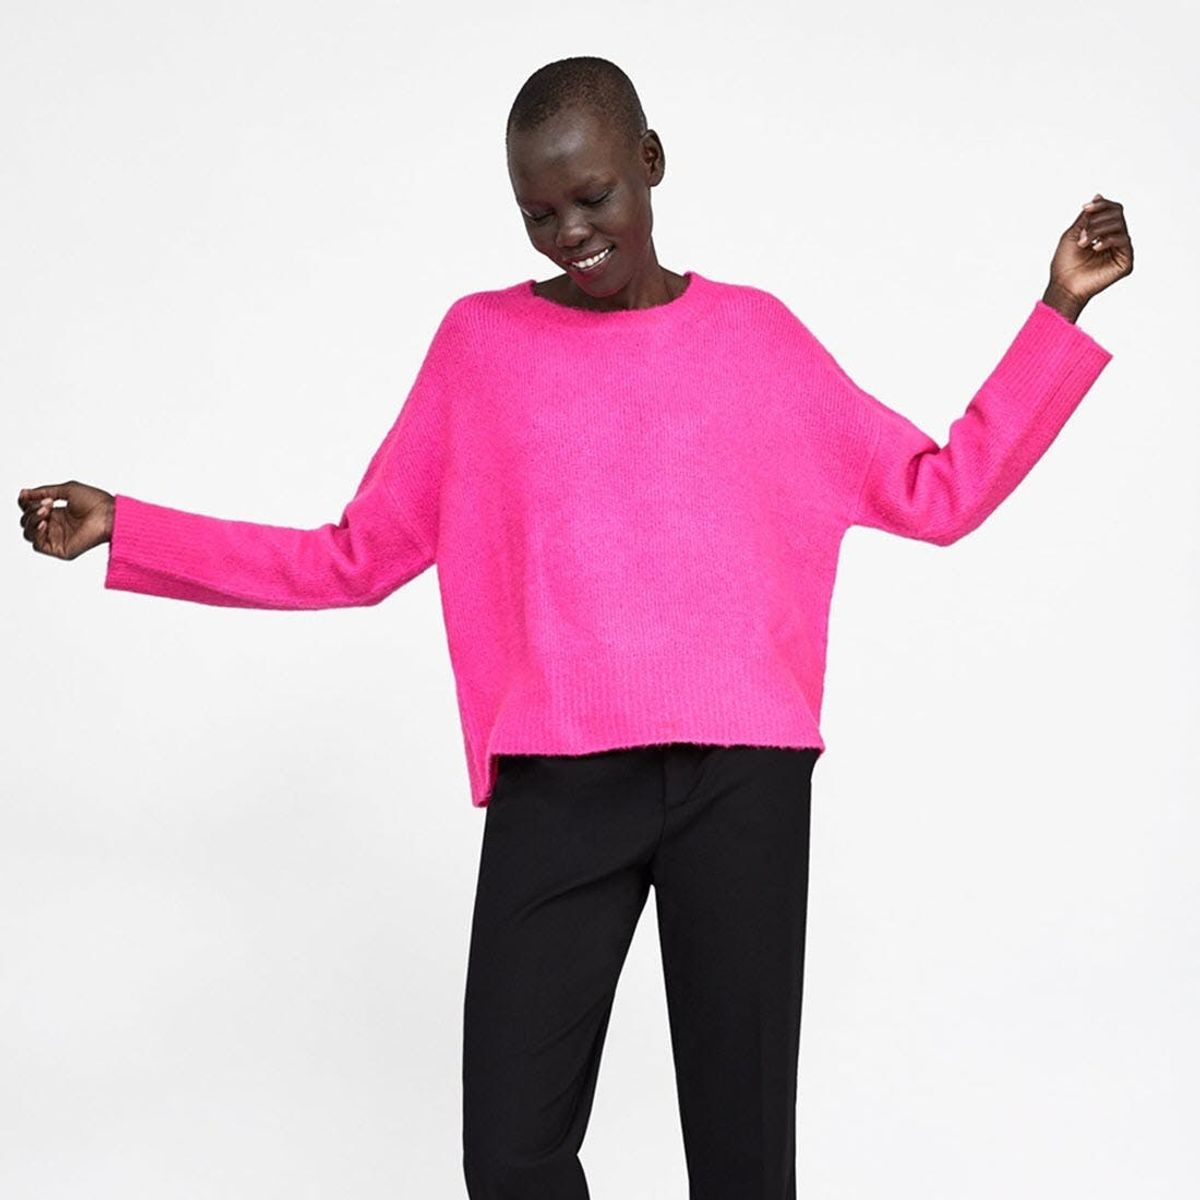 19 Neon Fashion Buys to Brighten Up Your Spring Wardrobe